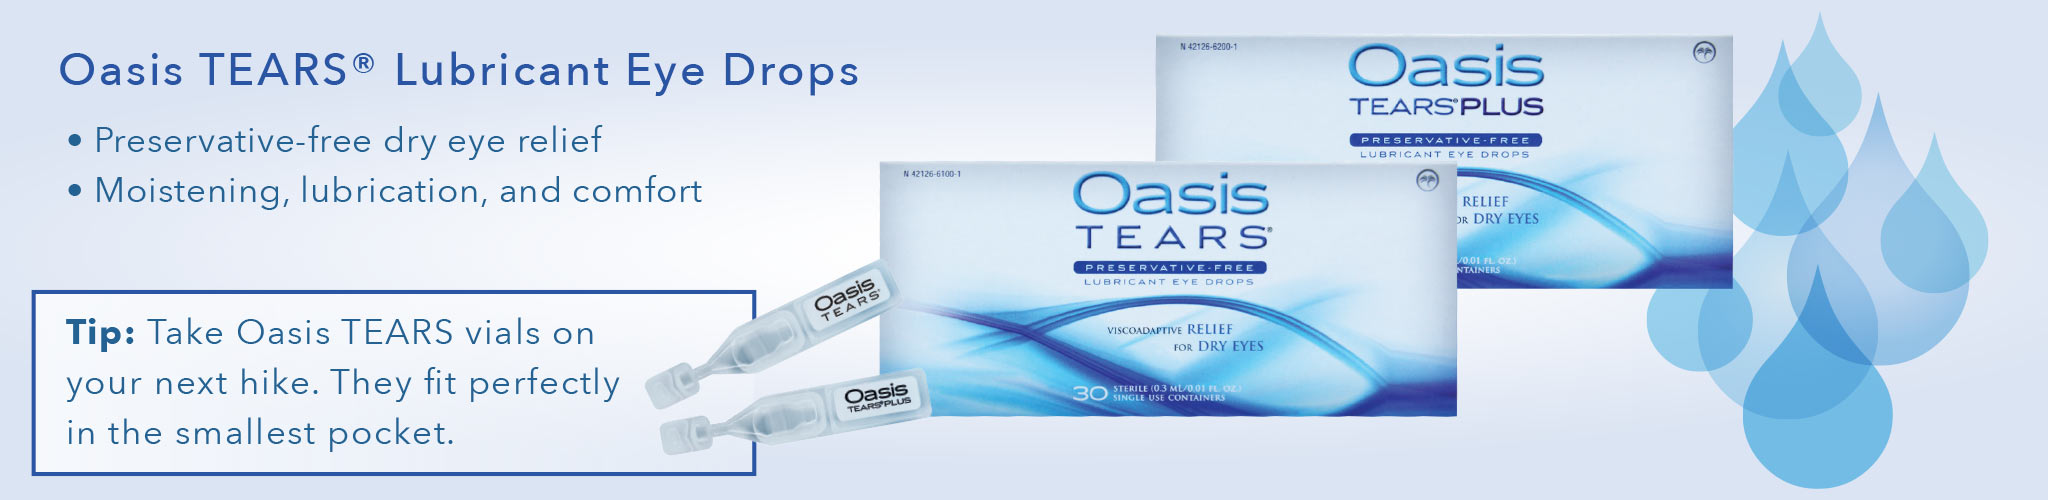 oasis tears lubricant eye drops